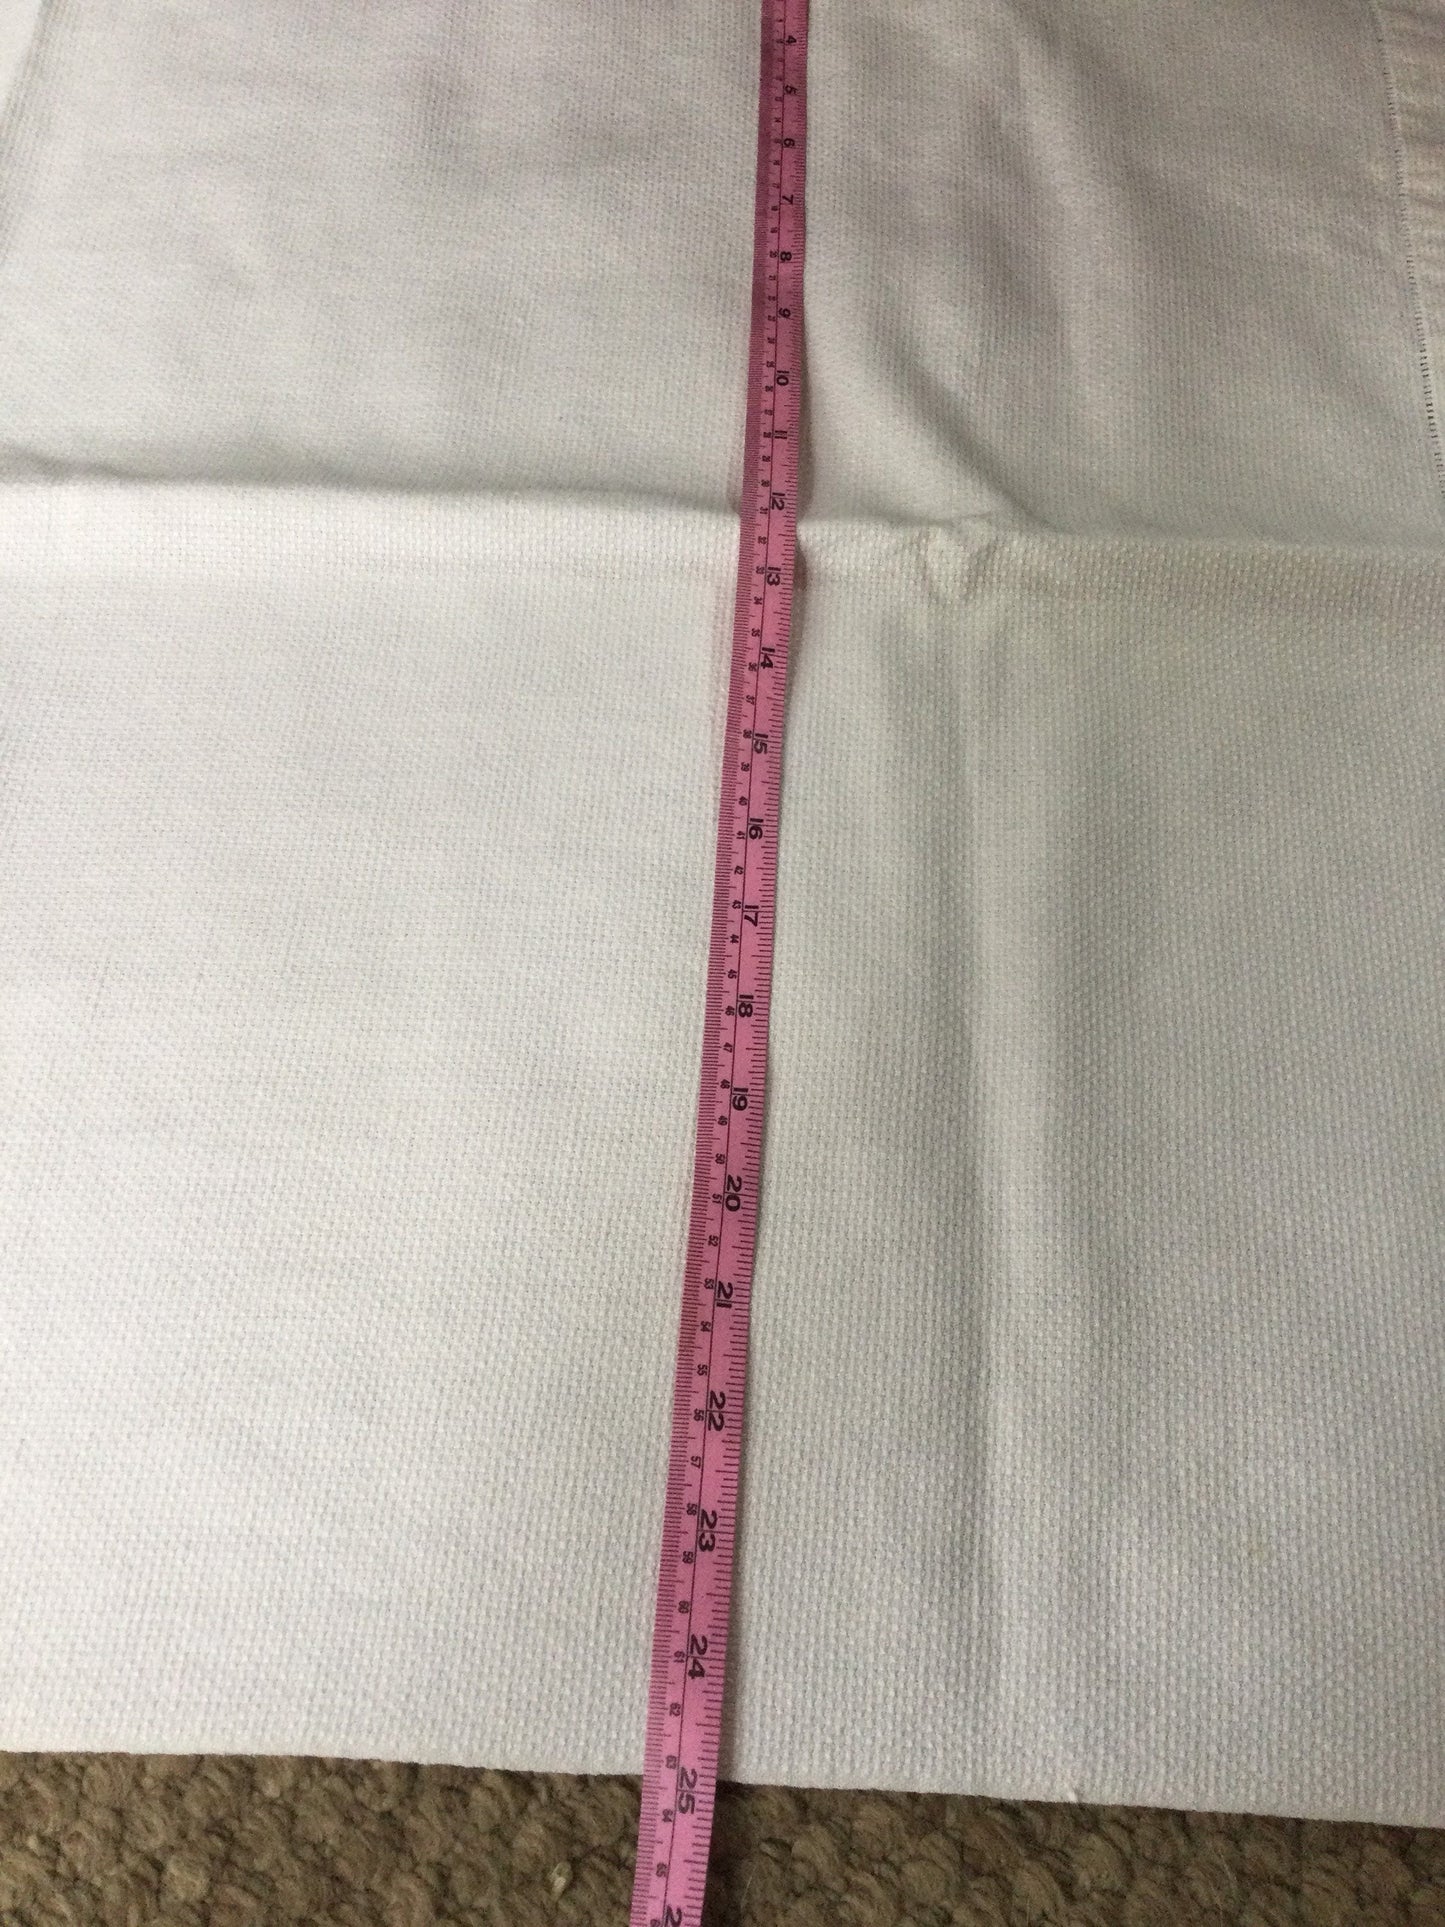 50 x 25” crisp textured linen white Vintage crochet edge long tablecloth lacework embroidered floral runner